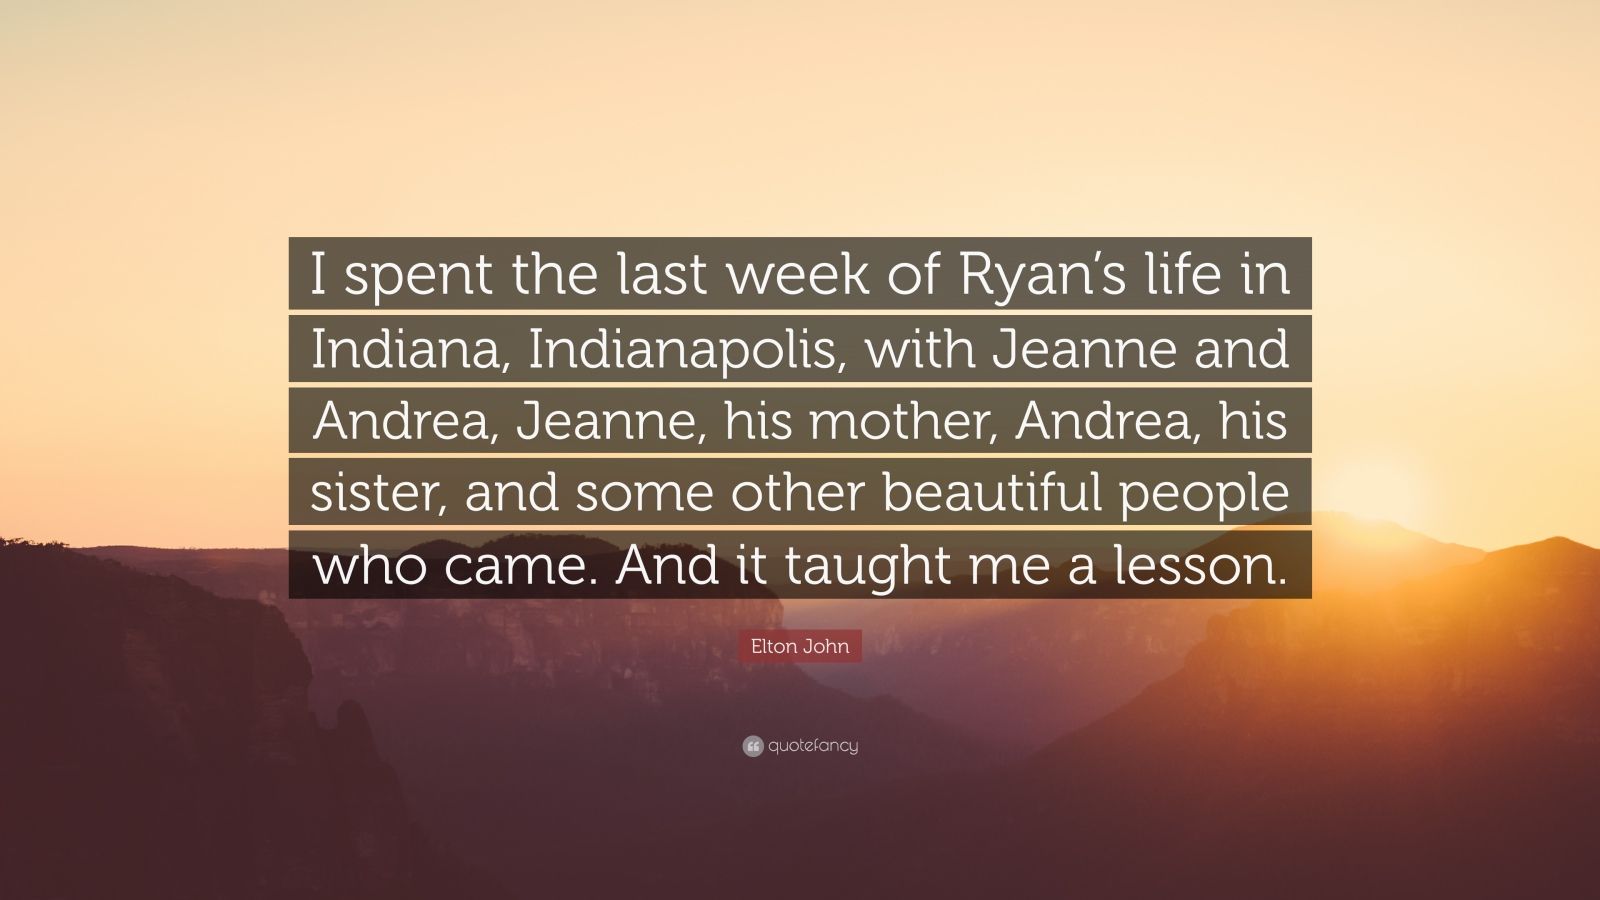 Elton John Quote “I spent the last week of Ryan s life in Indiana